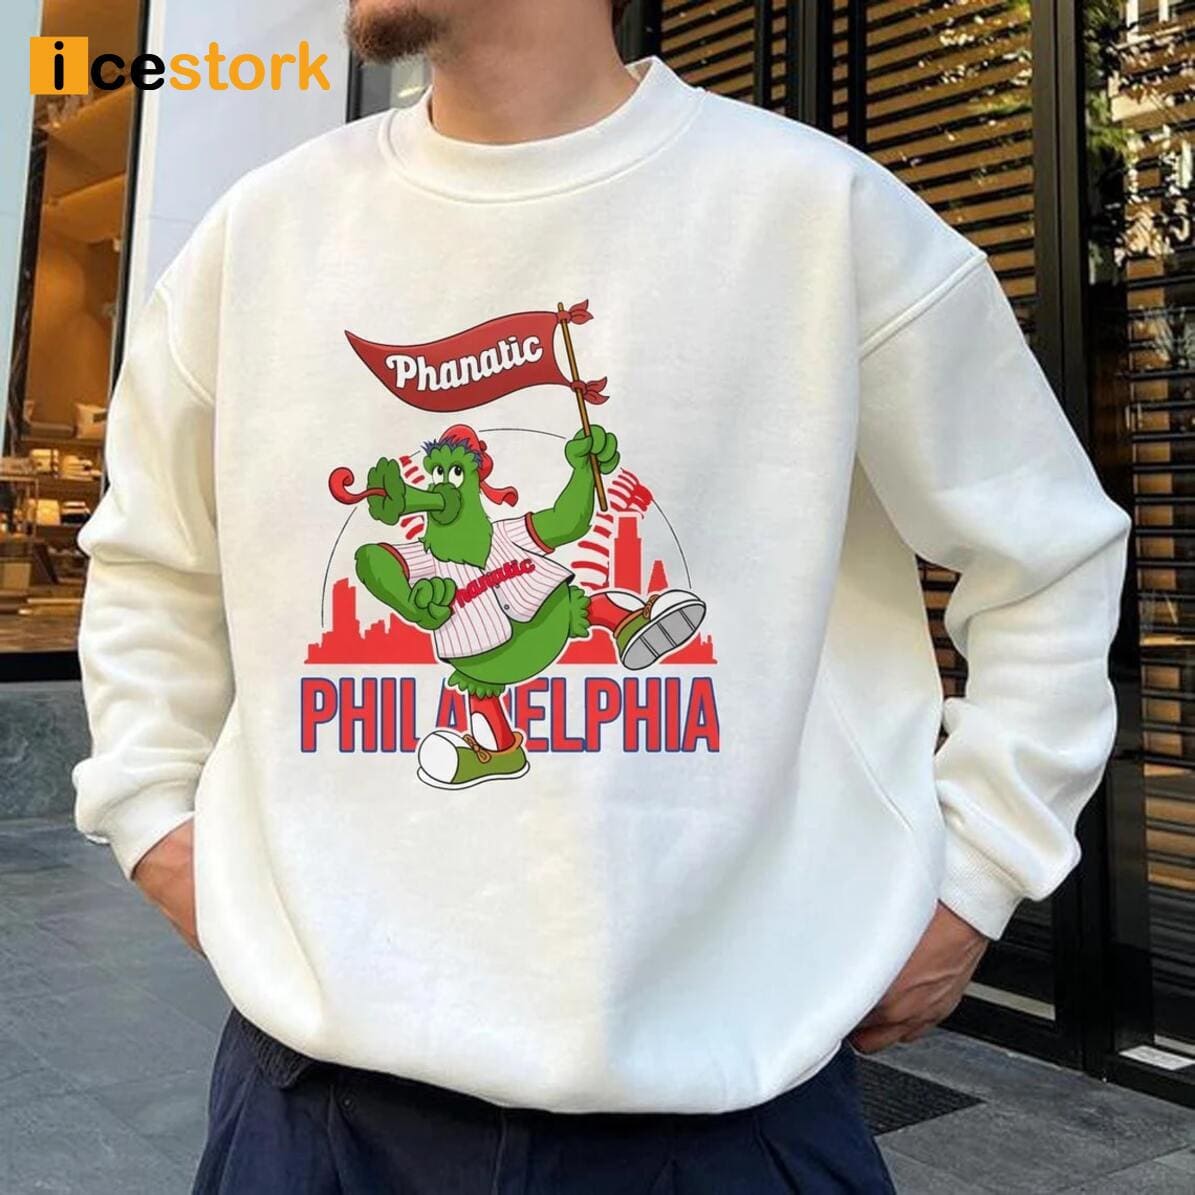 Dancing on my own Philadelphia Phillies shirt, hoodie, sweater